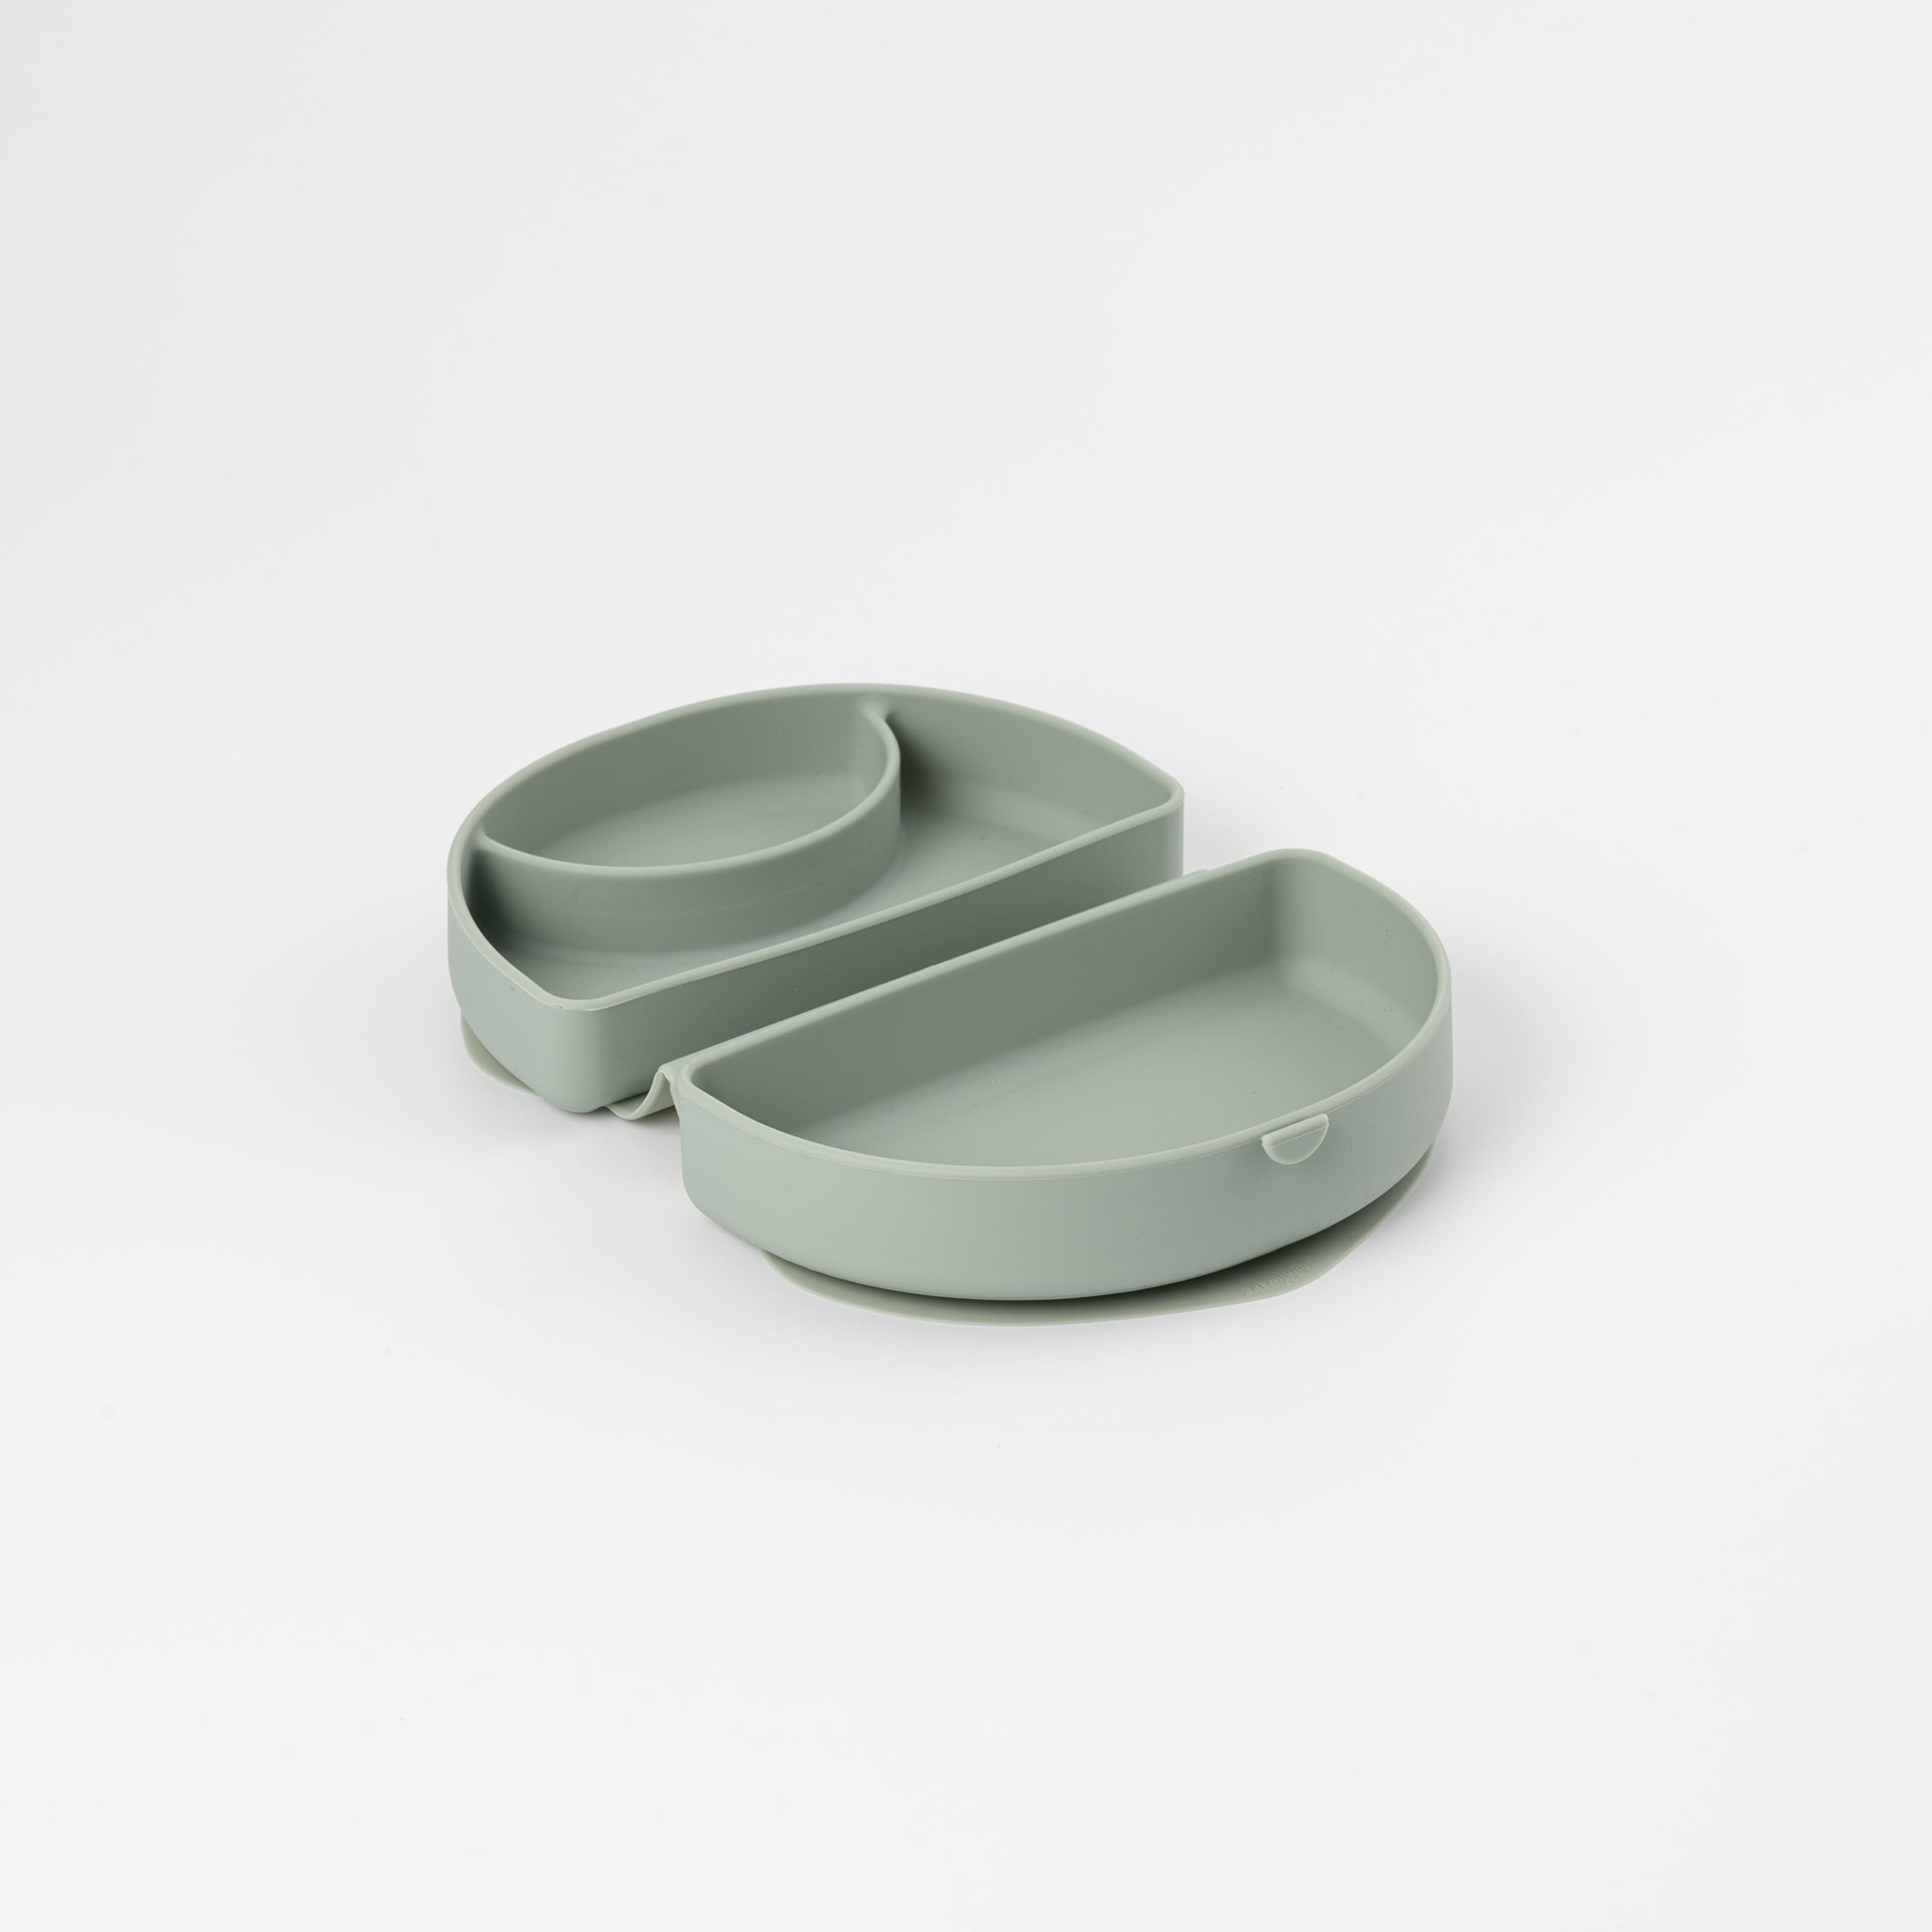 miniware-silifold-folding-silicone-lunch-box-sage-green- (5)